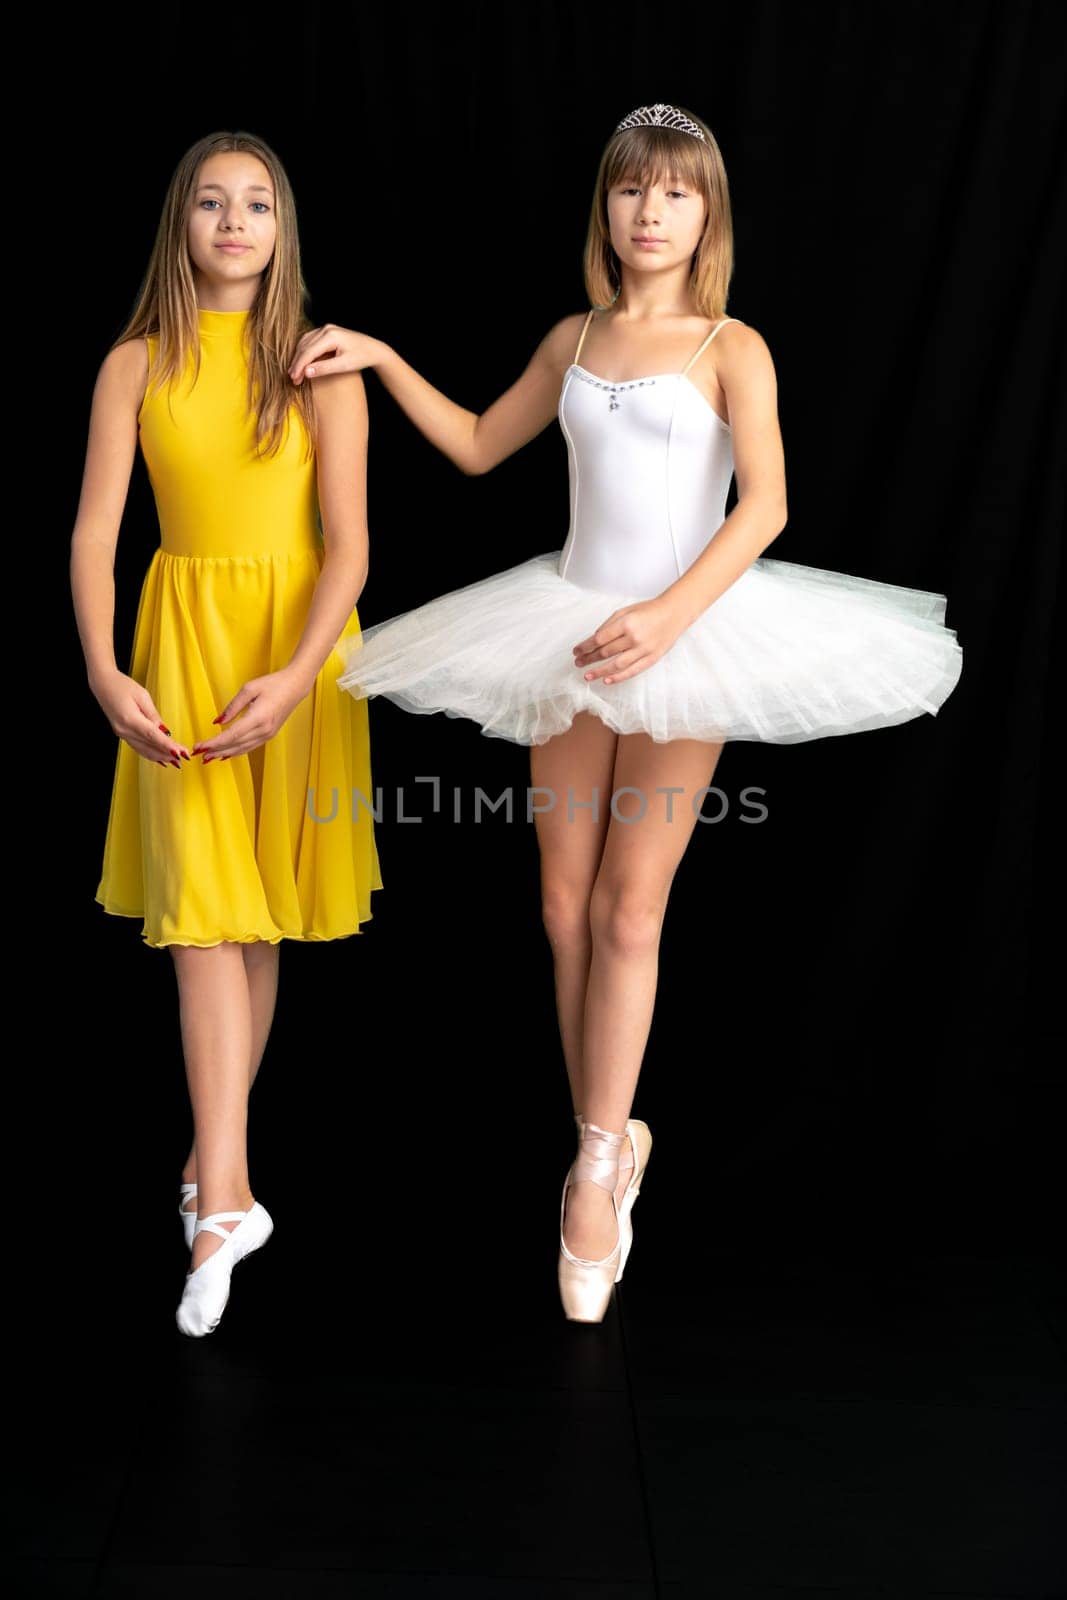 teenage ballerinas in the studio, portrait on a black background by Edophoto